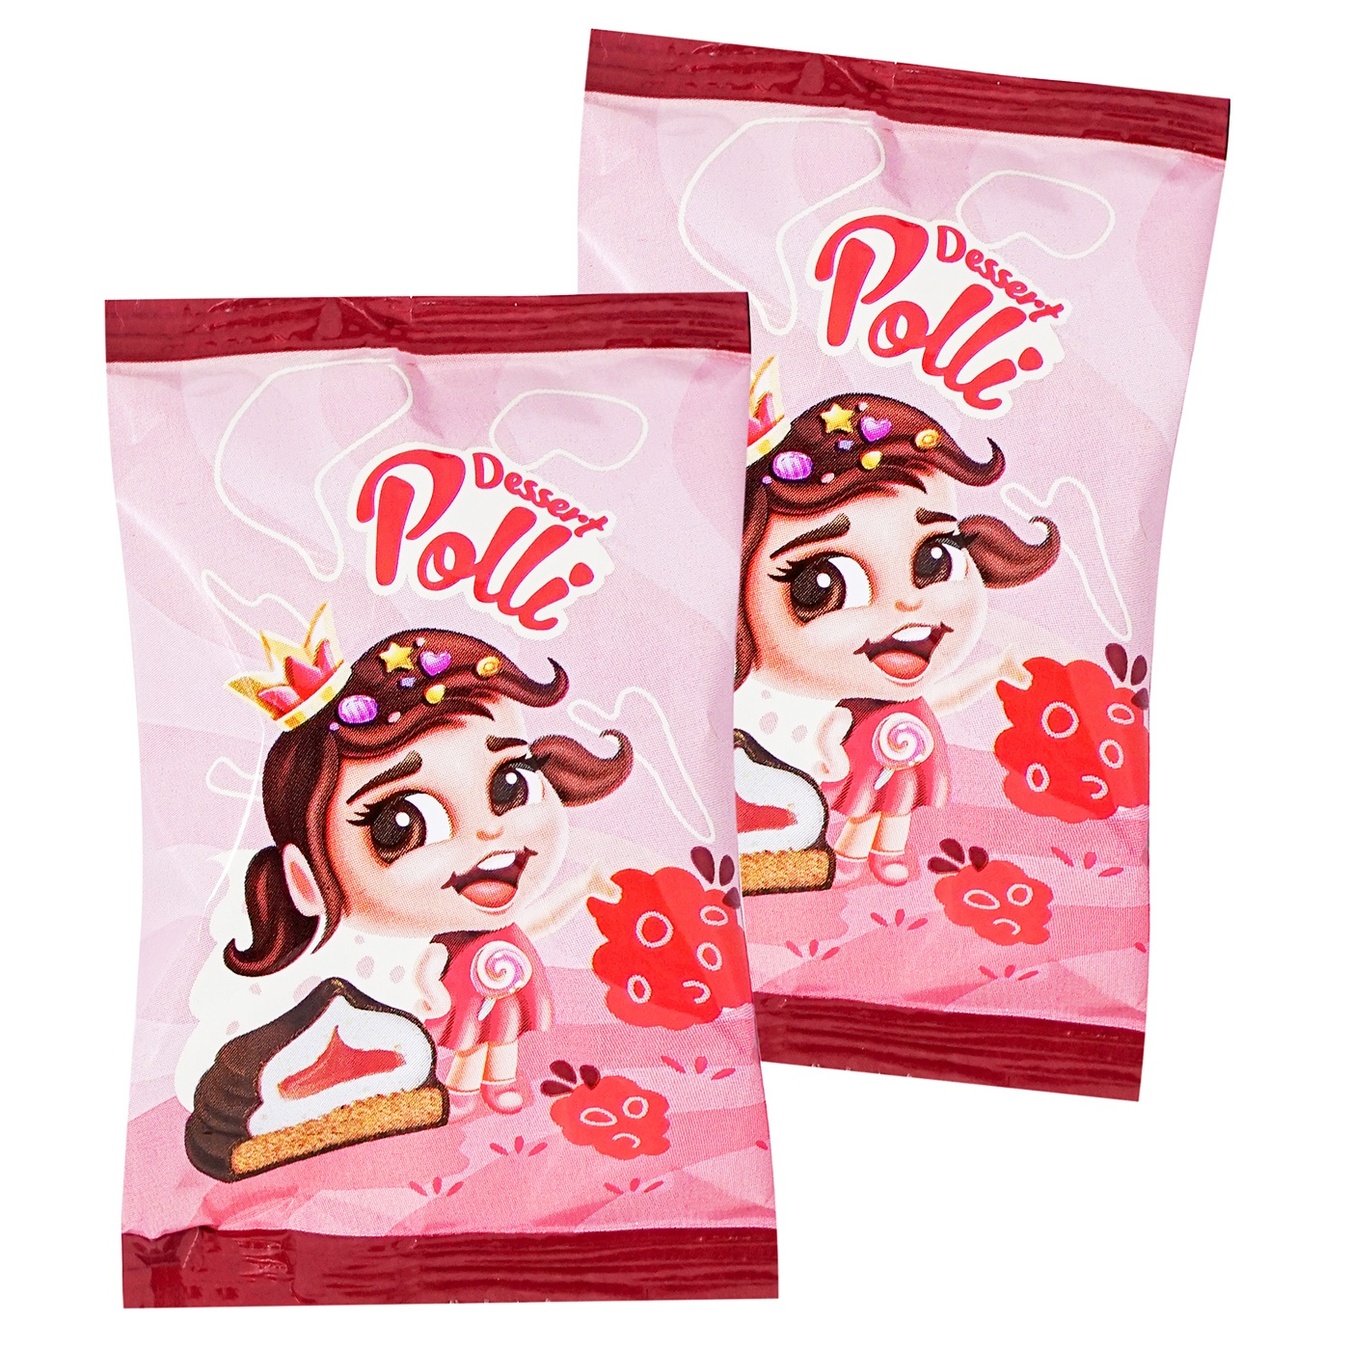 Candy Lapotushka Dessert Polly with raspberry flavor